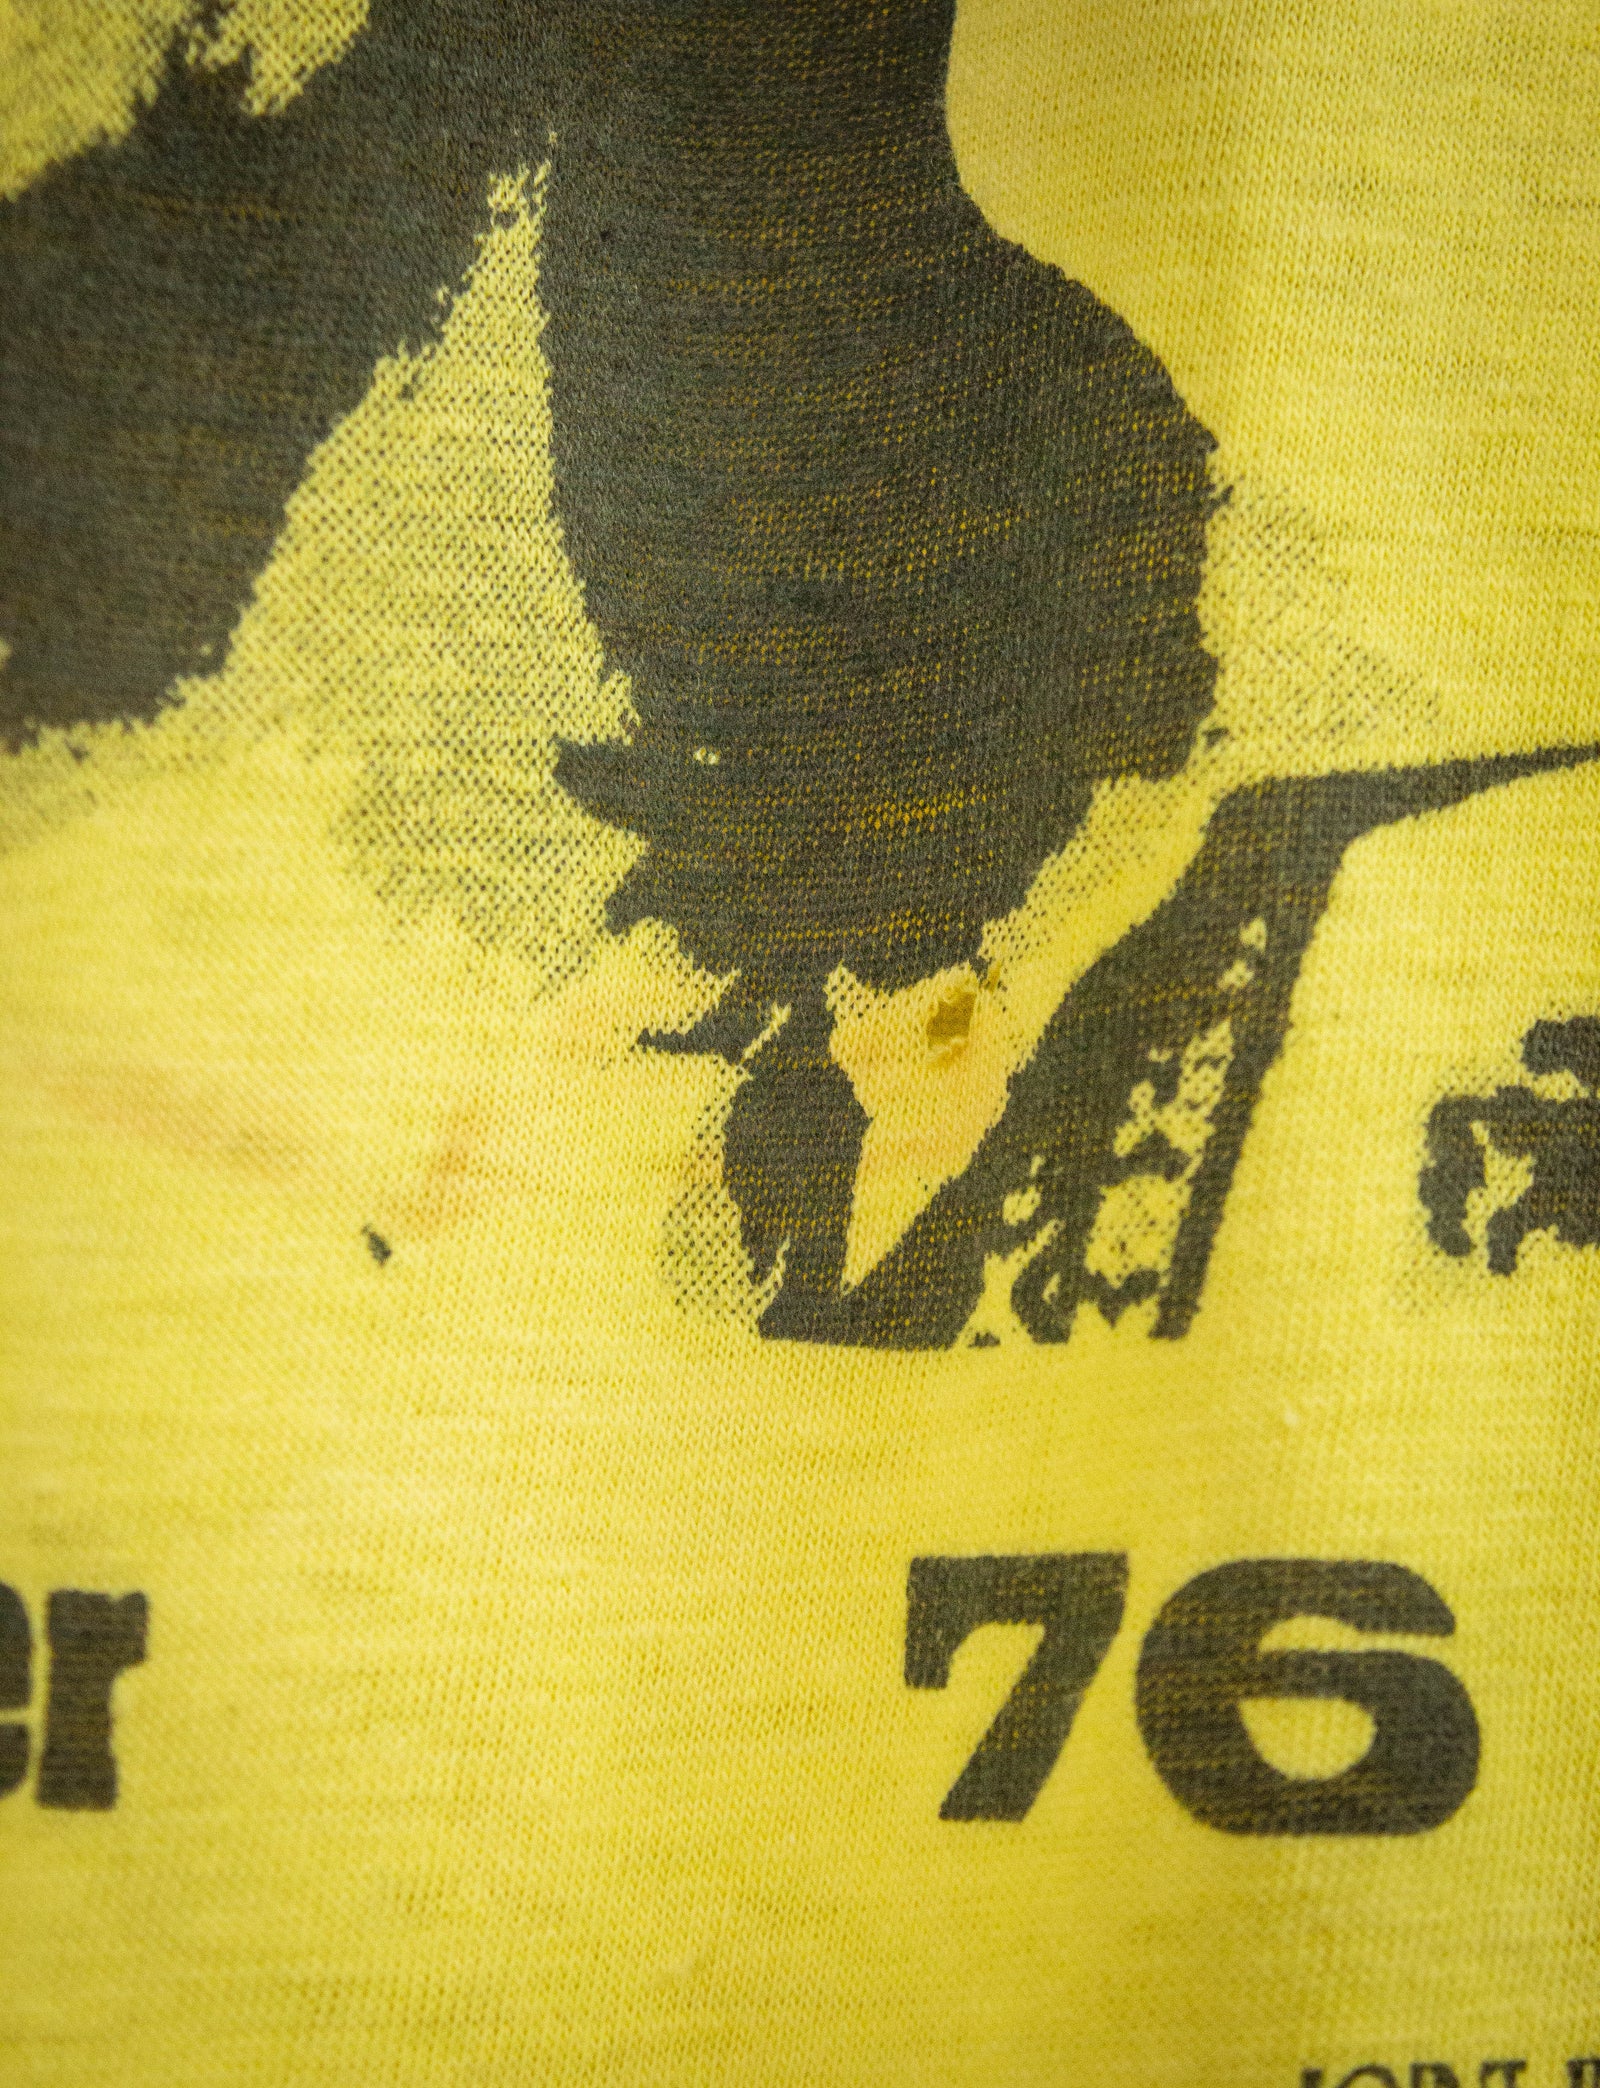 Vintage Robin Trower EnTam Concert T Shirt 1976 Yellow Large